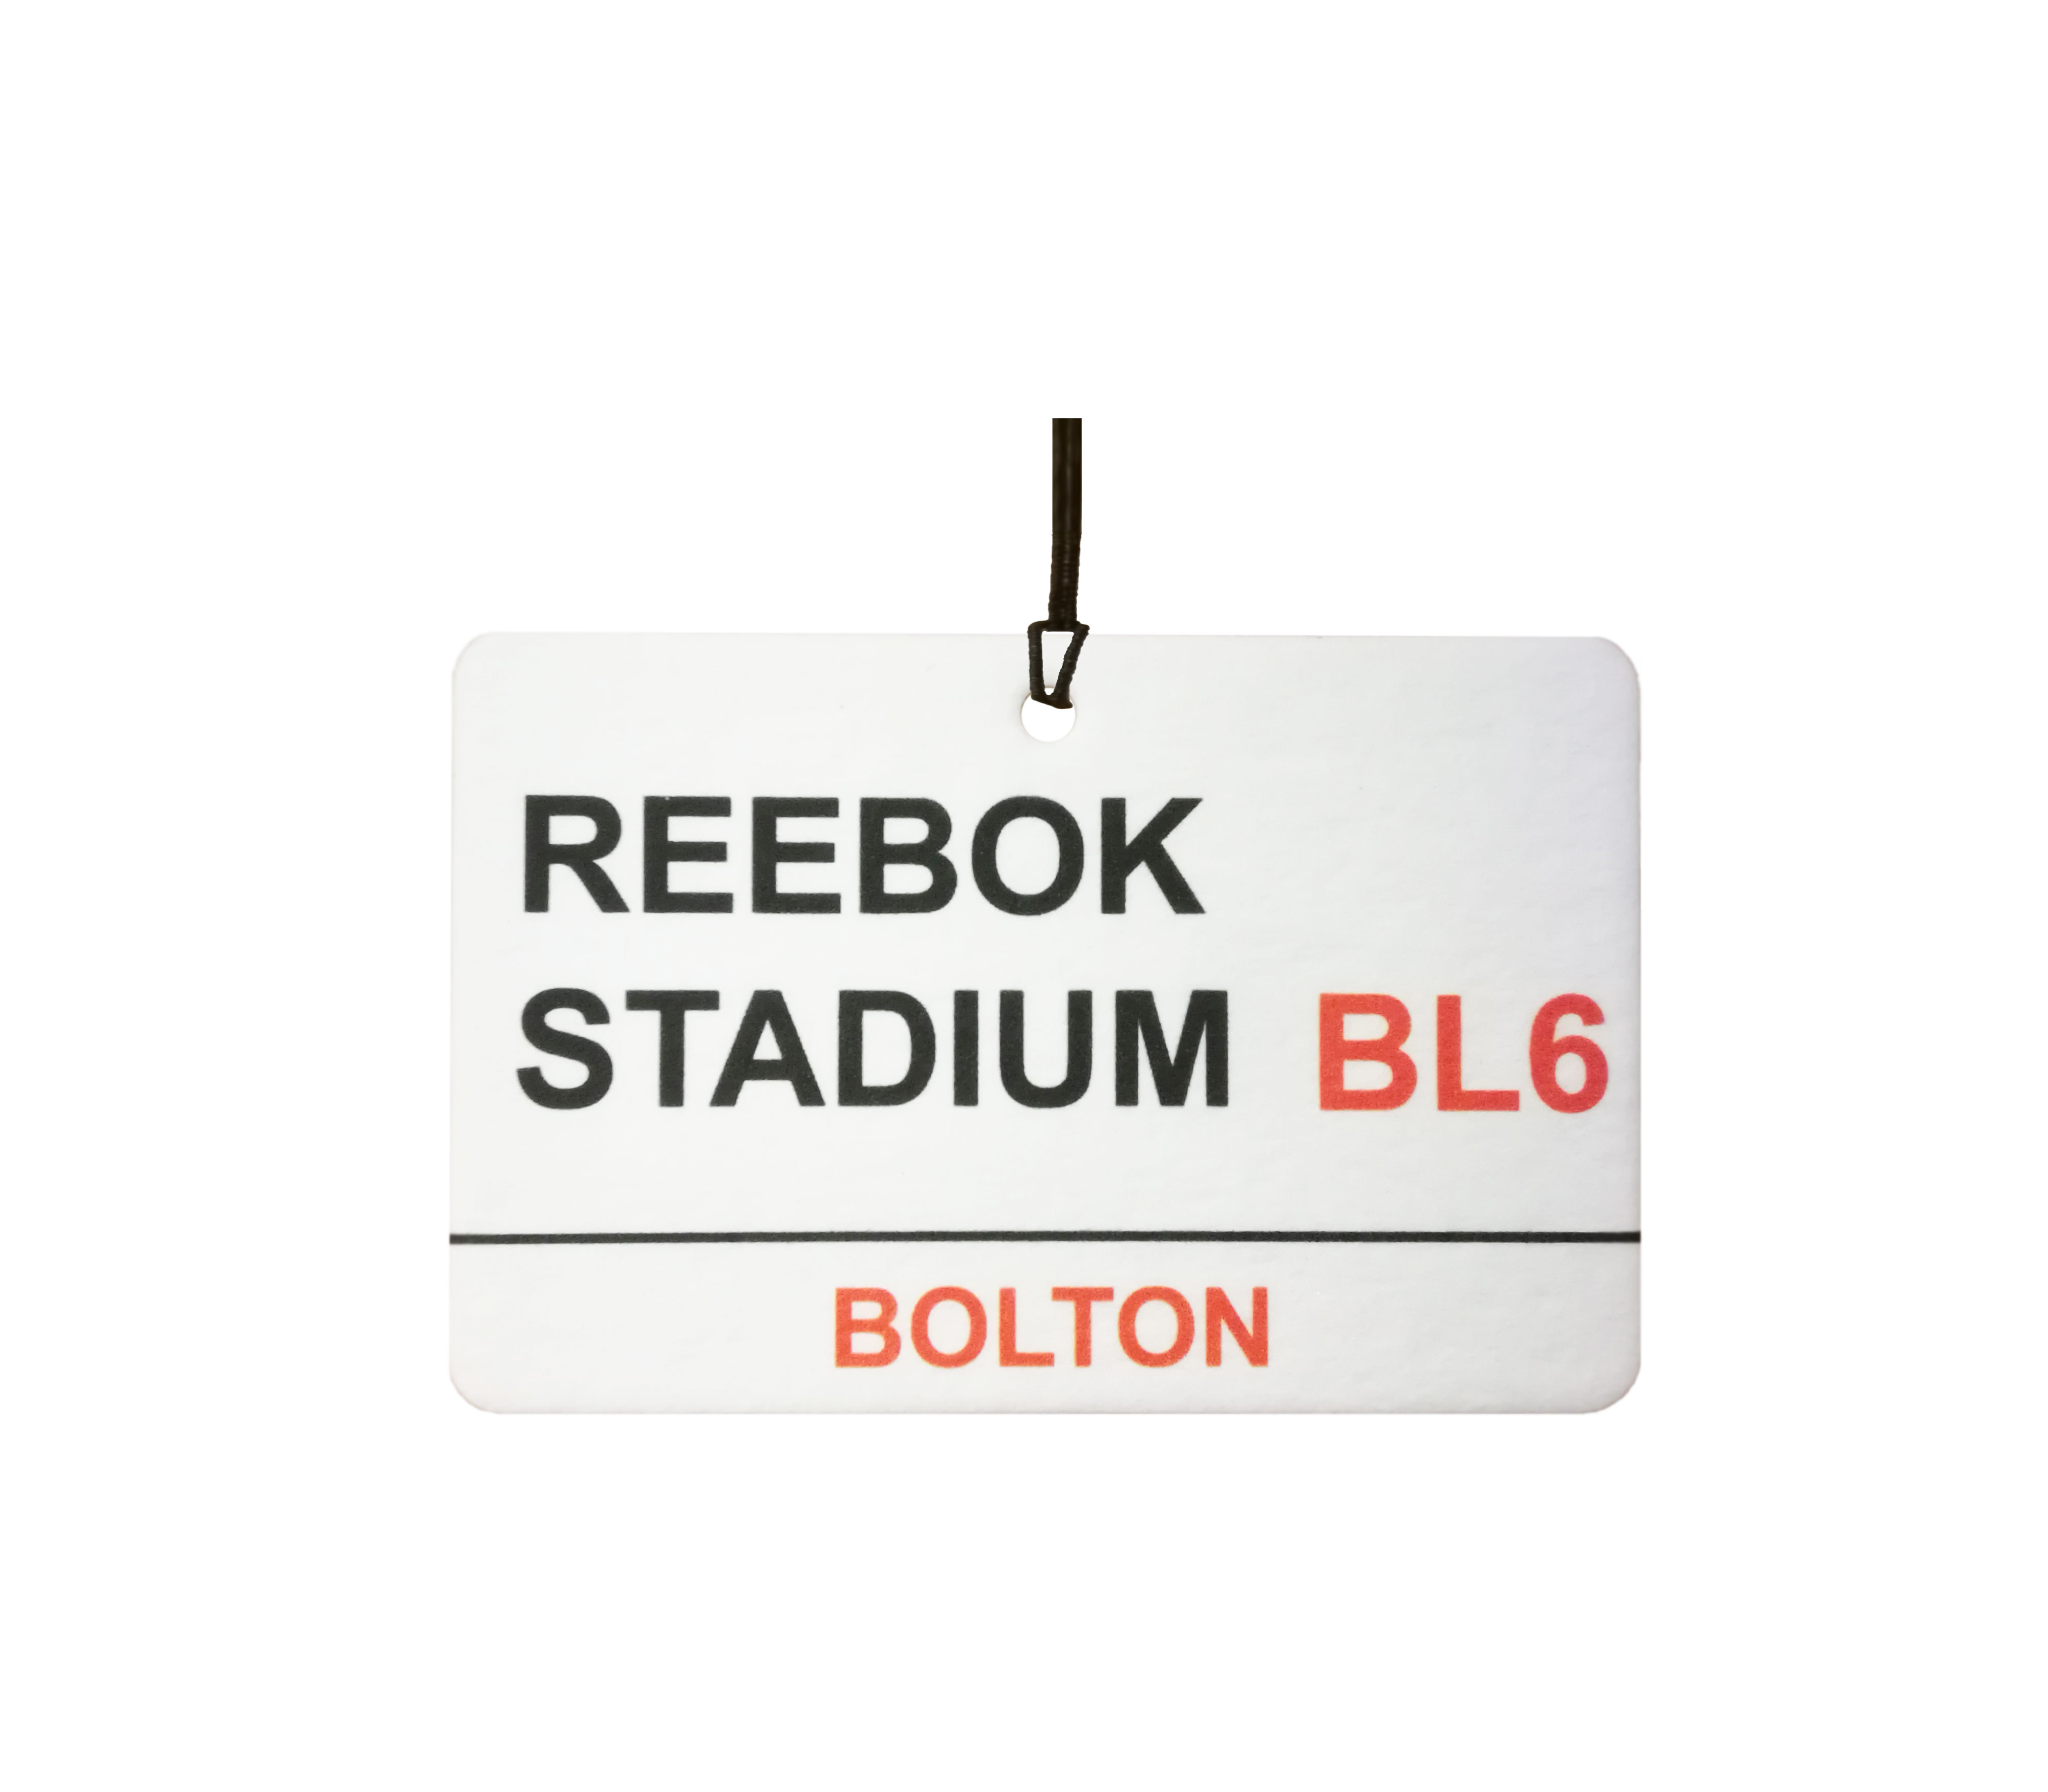 Bolton / Reebok Stadium Street Sign